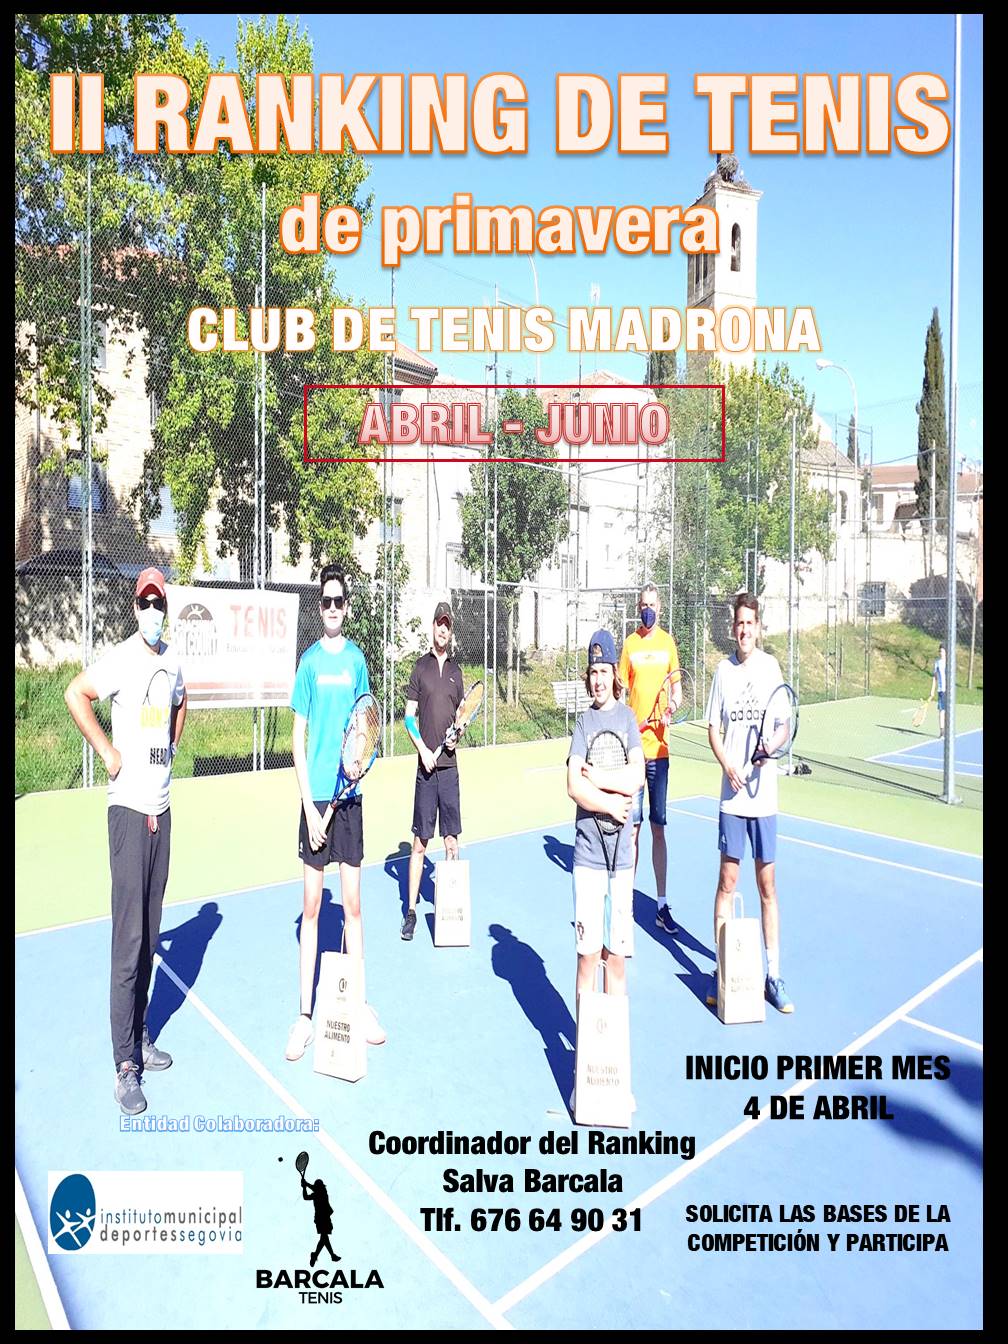 Club de Tenis Madrona: II Ranking de Tenis de Primavera